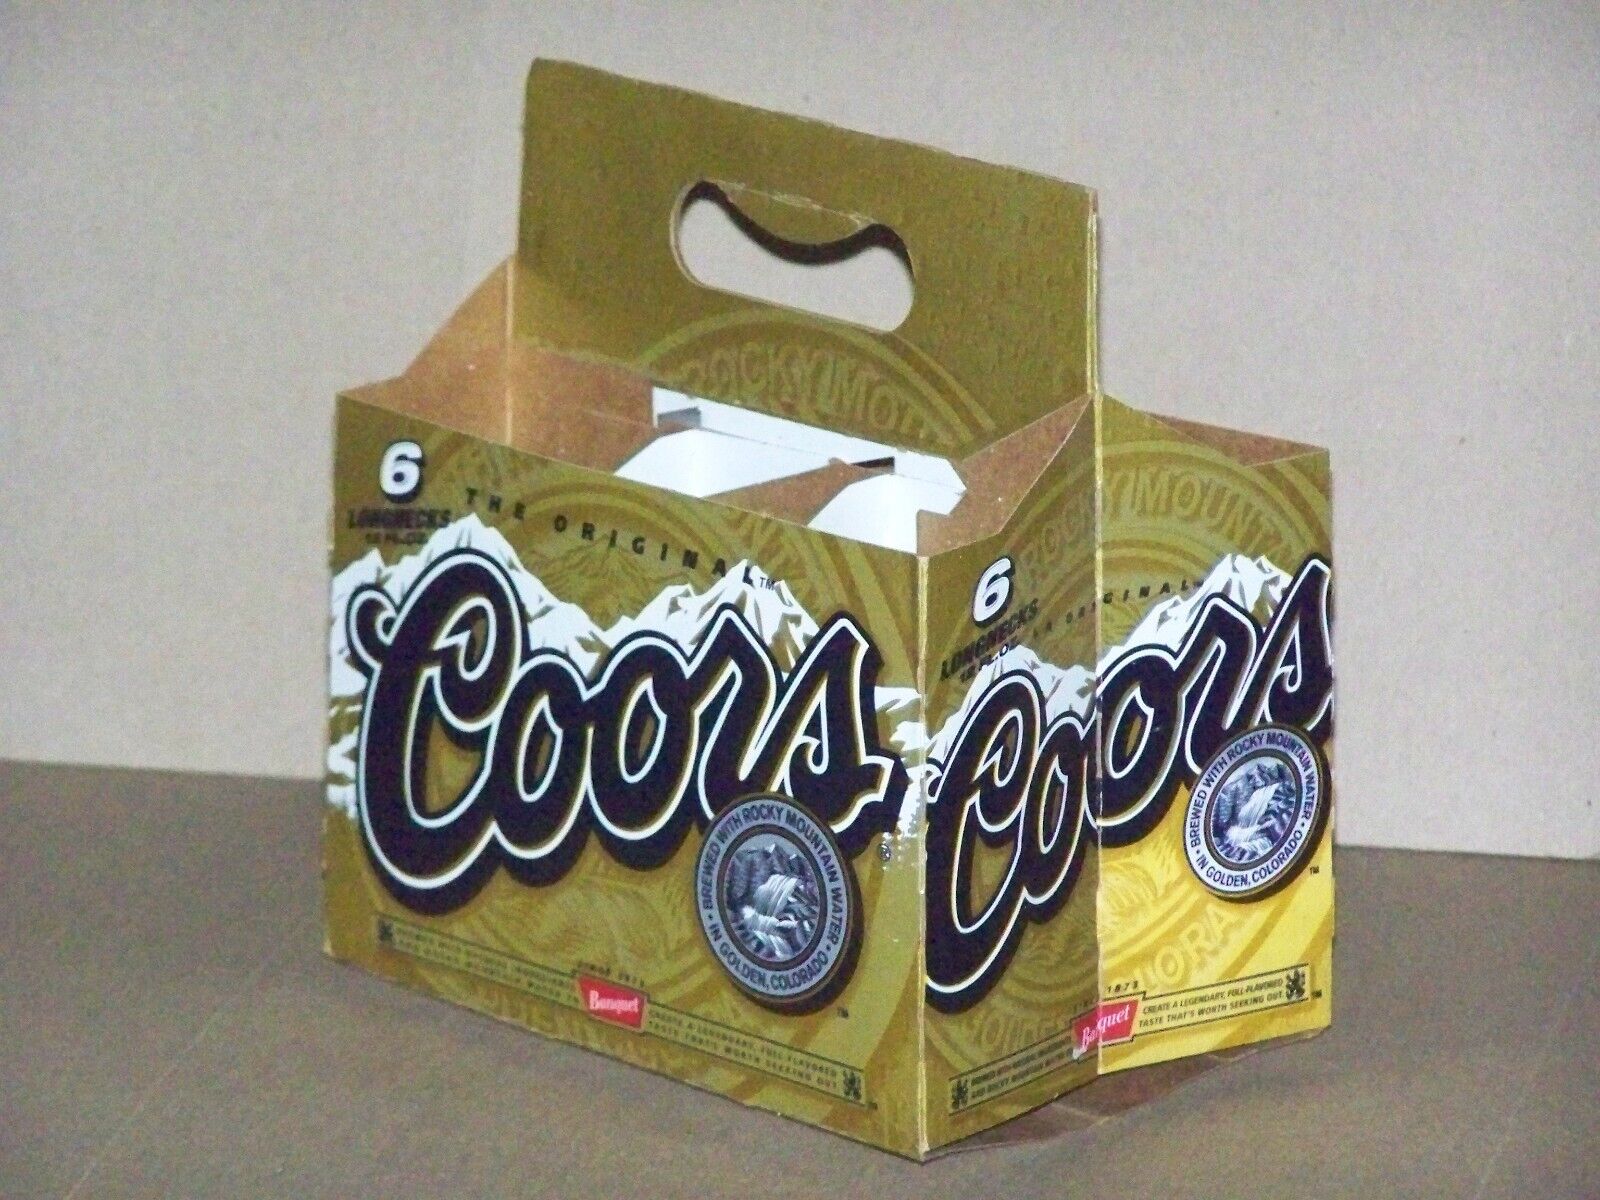 RARE Original Coors Beer Long Neck 12 oz. Bottles 2004 6 Pack Carton Carrier